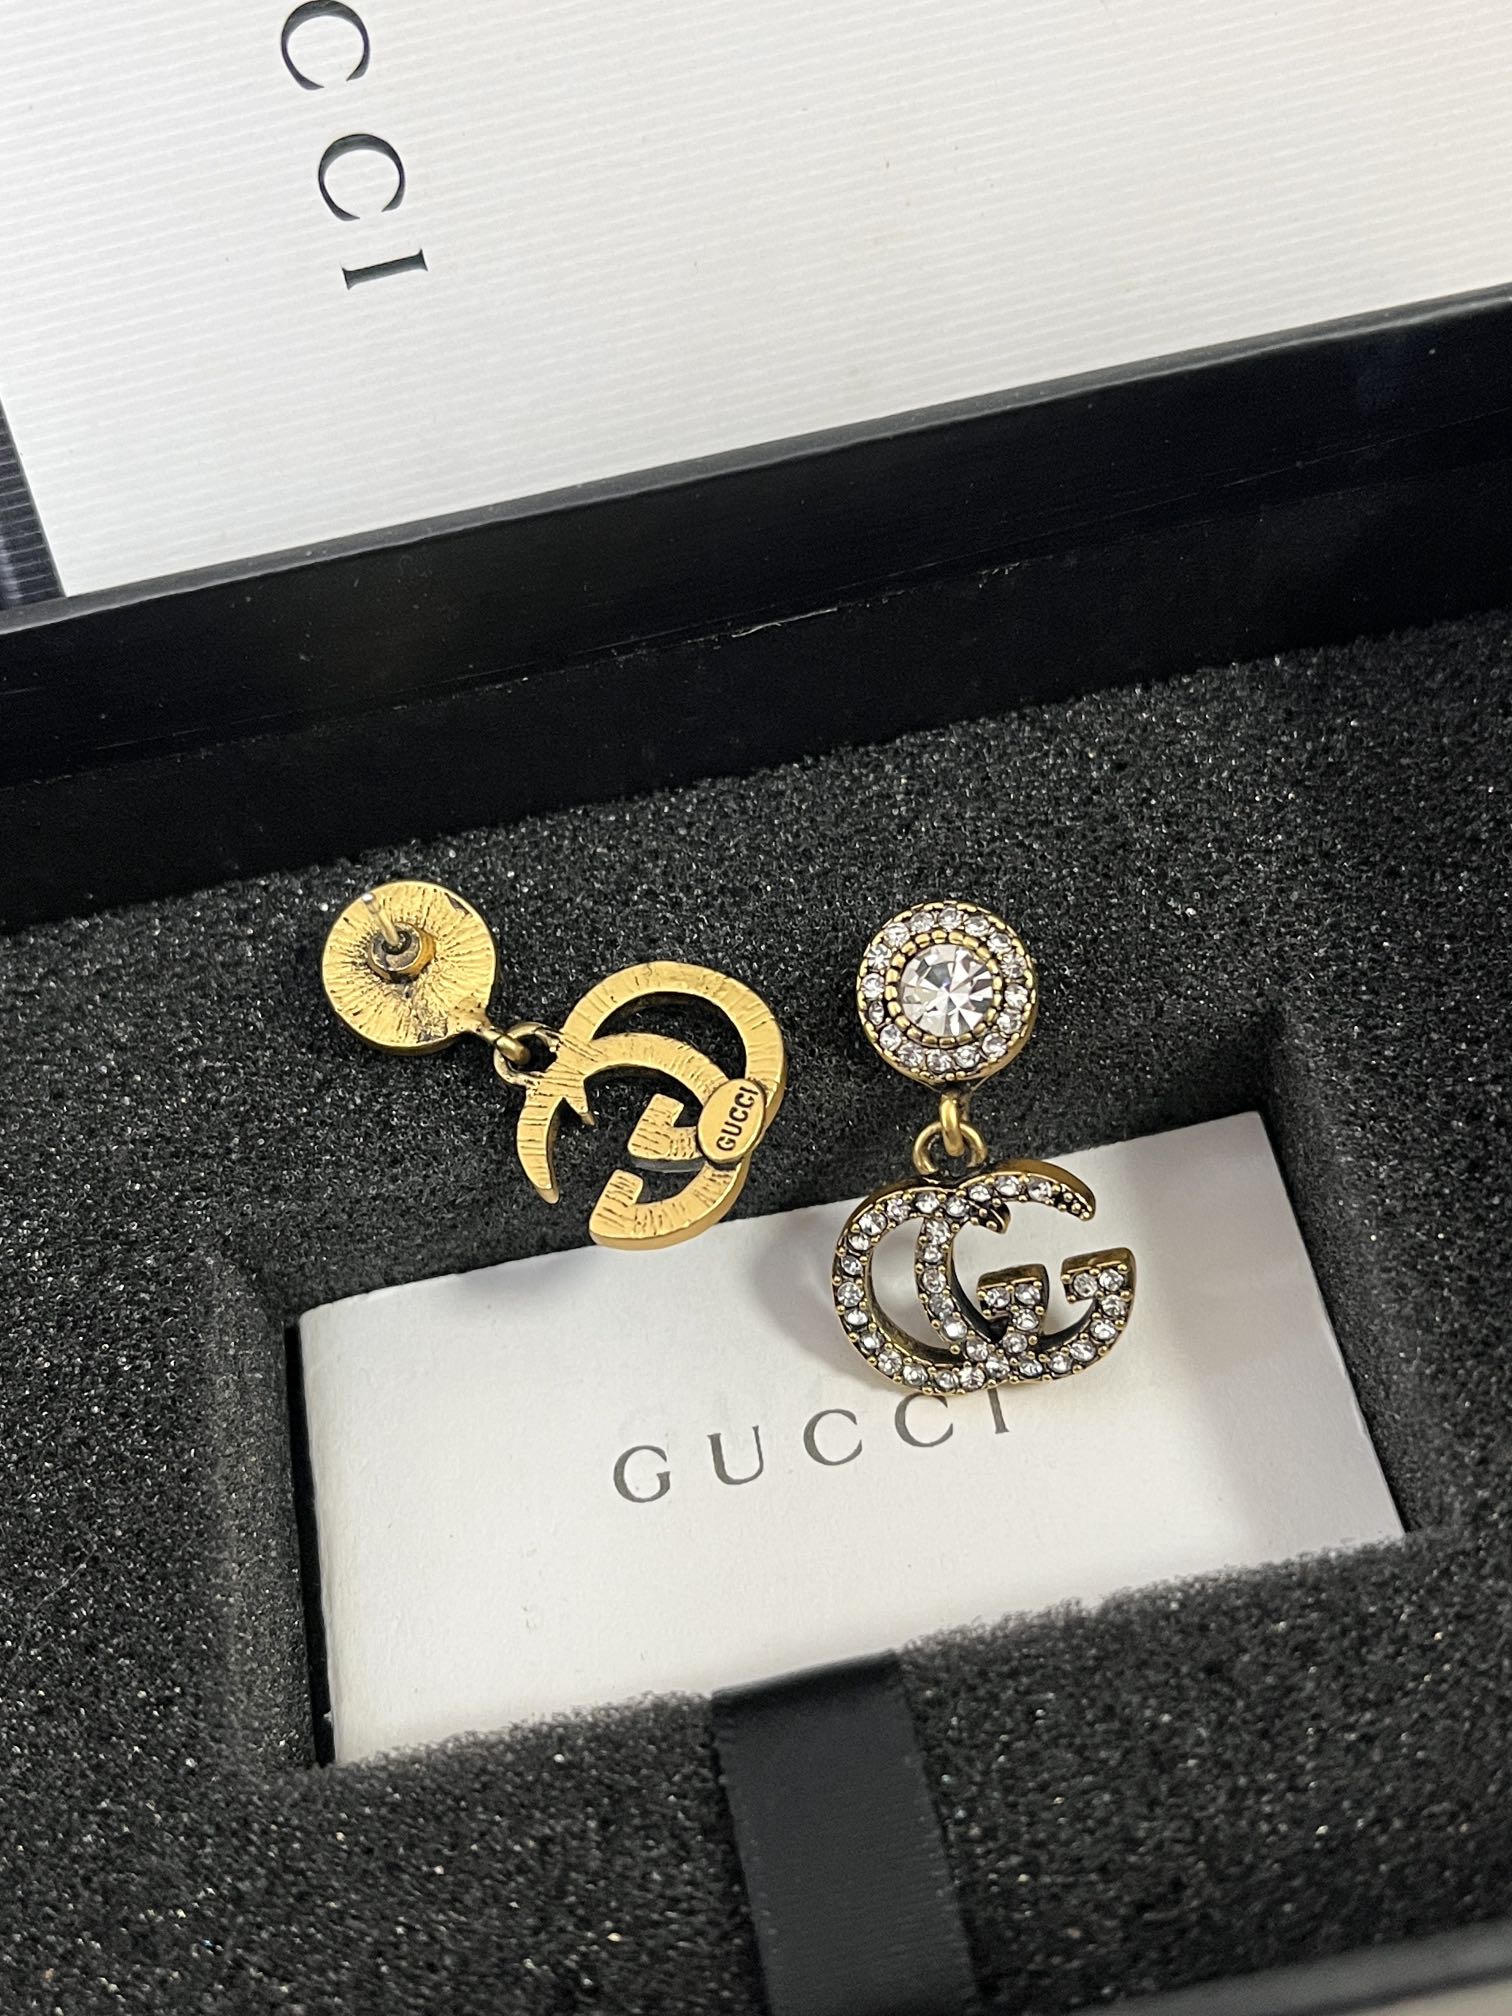 A946  Gucci earrings